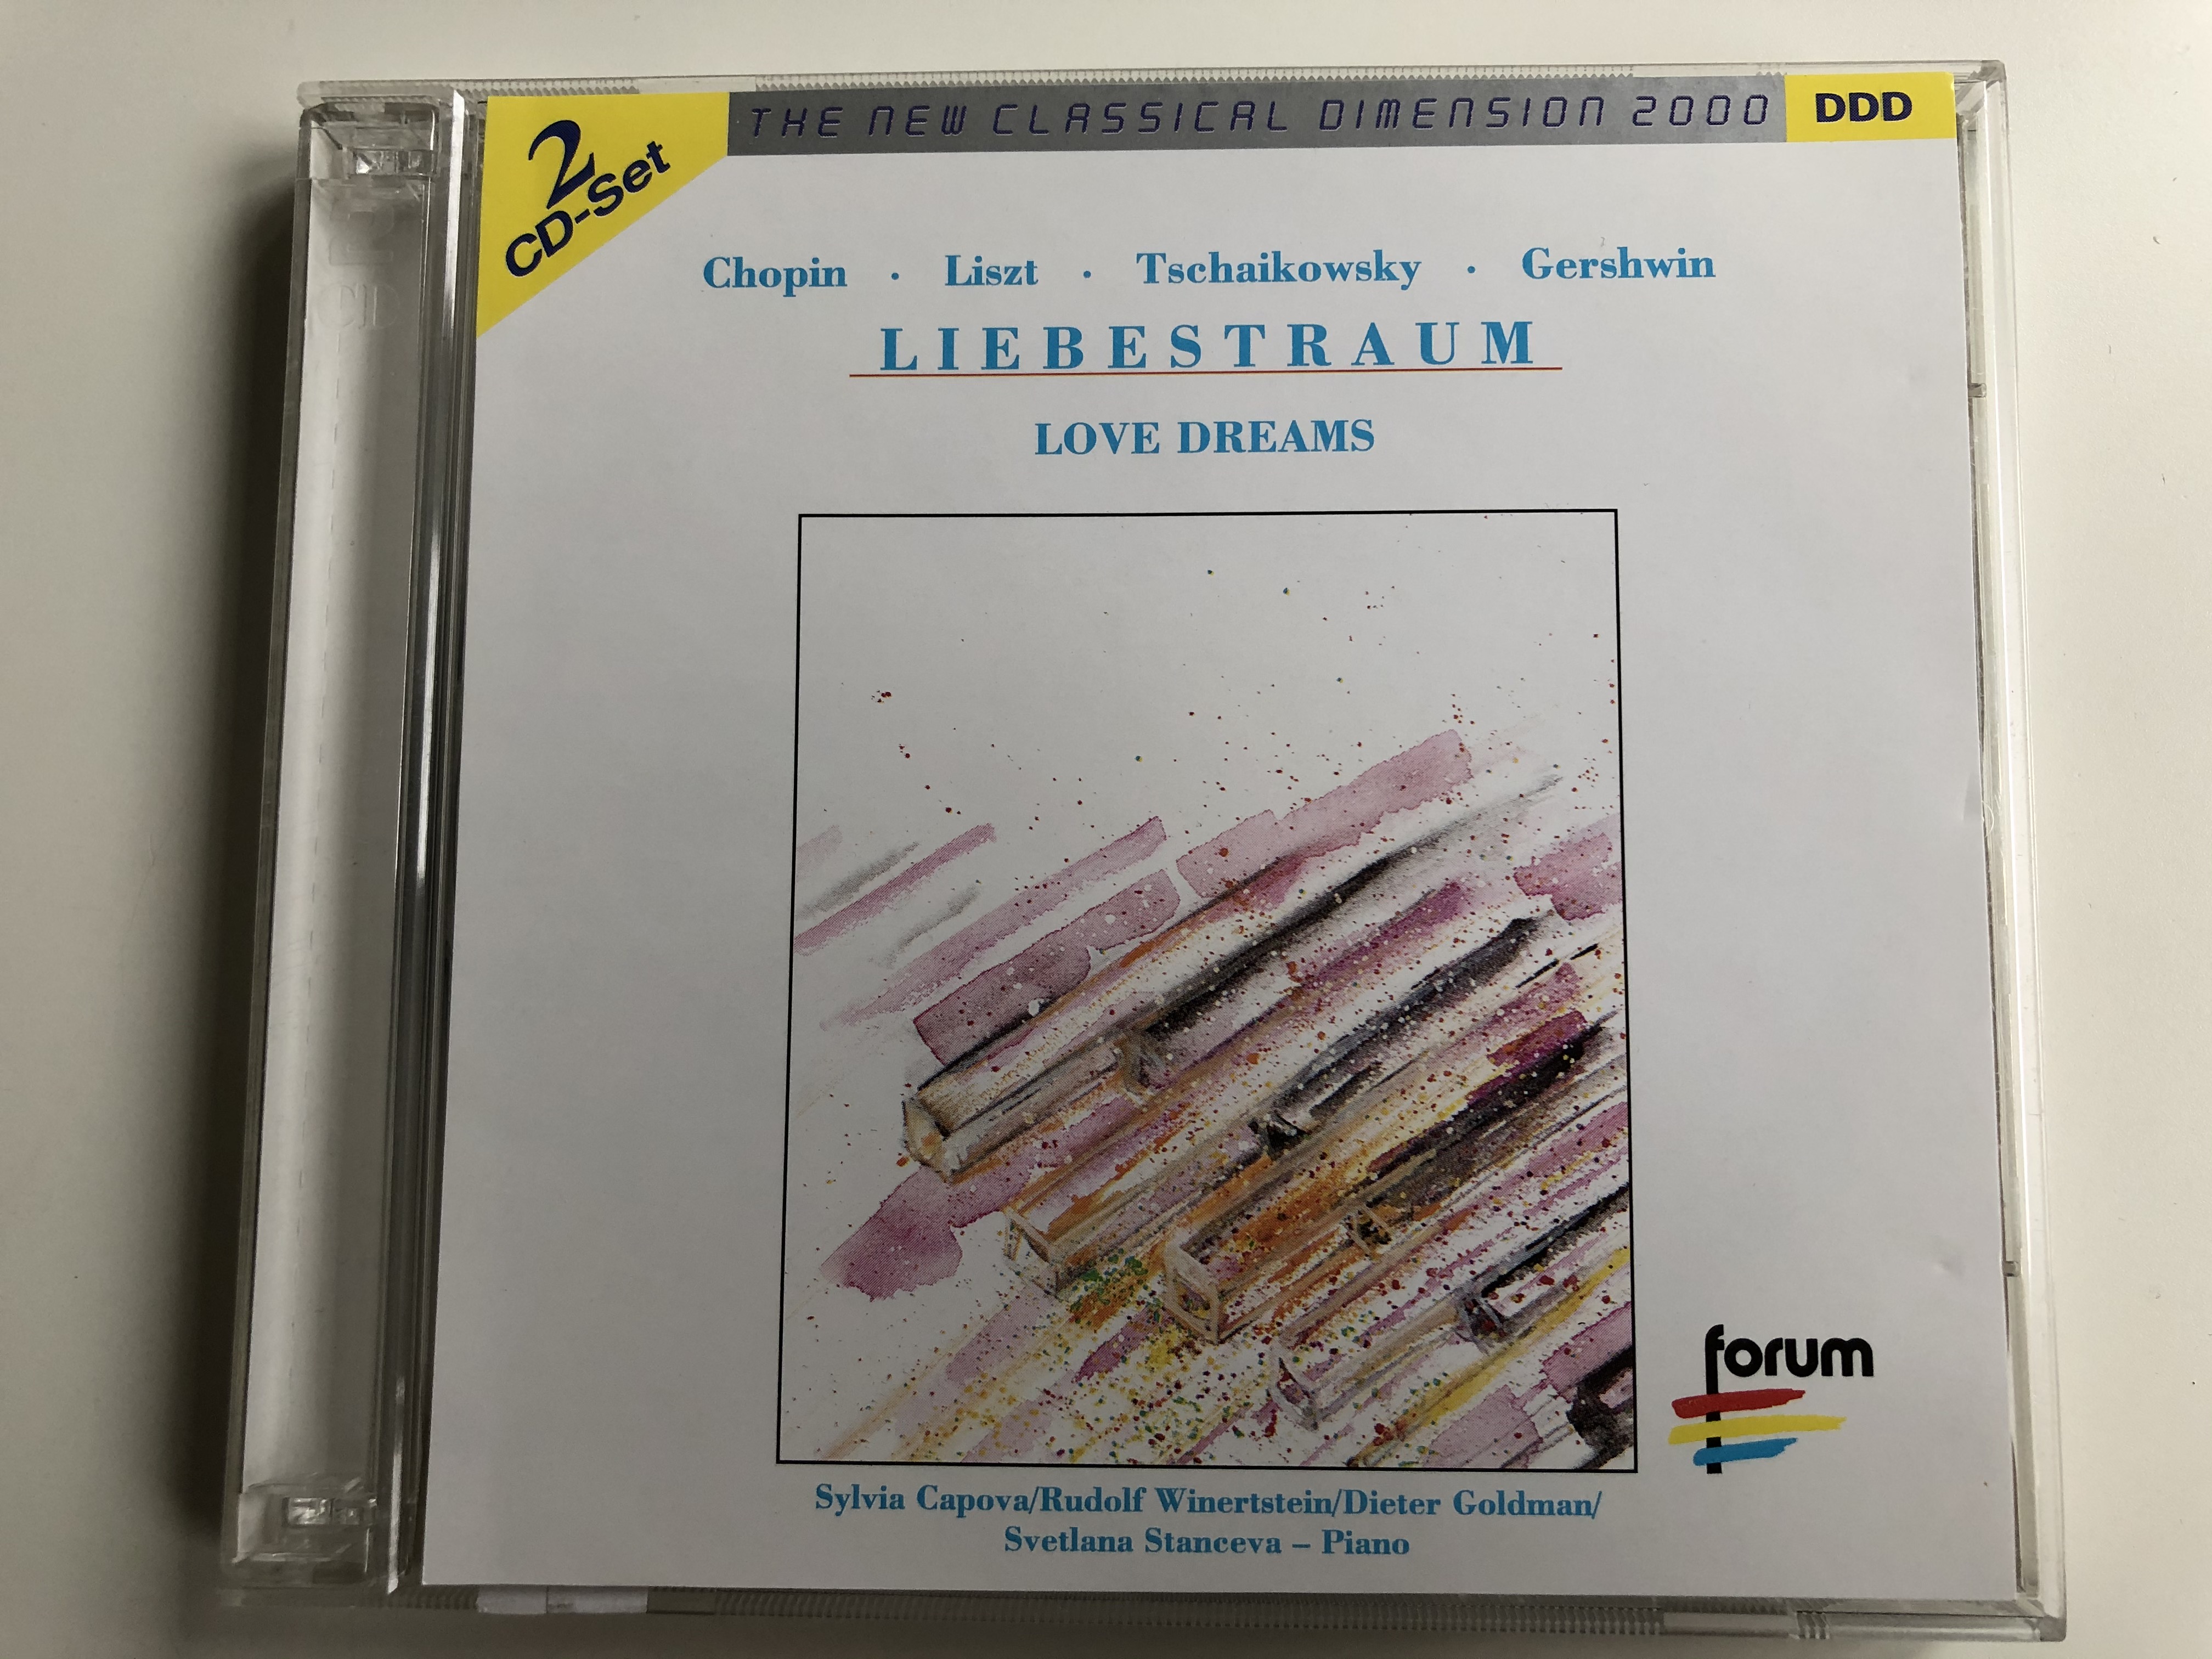 chopin-liszt-tchaikovsky-gershwin-liebestraum-love-dreams-sylvia-capova-rudolf-winertstein-dieter-goldman-piano-svetlana-stanceva-forum-2x-audio-cd-416-2001-2n-1-.jpg